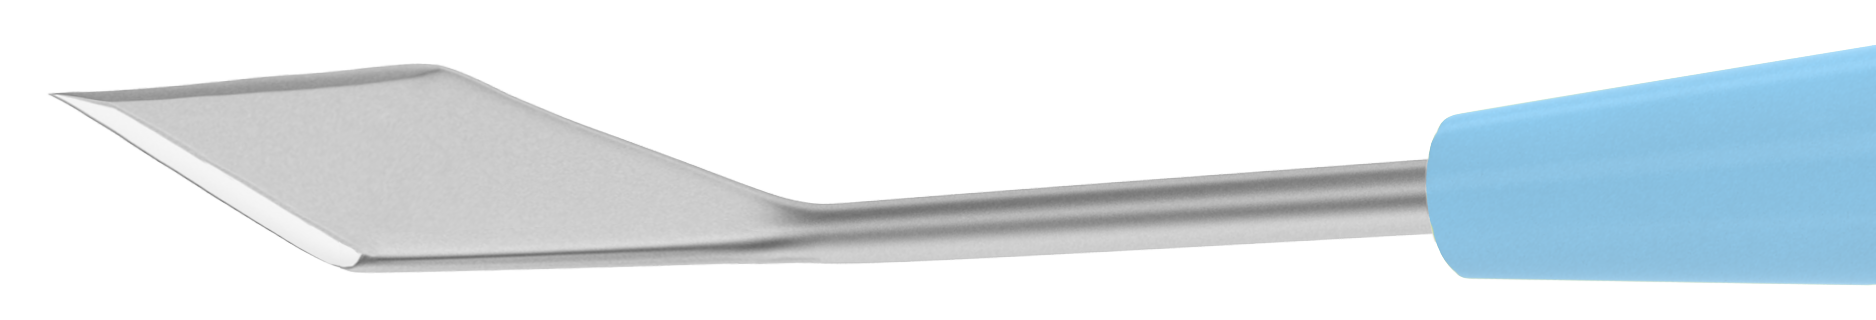 999R SL-27 Disposable Slit Knife, Single Bevel, 2.75 mm, Angled, Safety System, 6 per Box